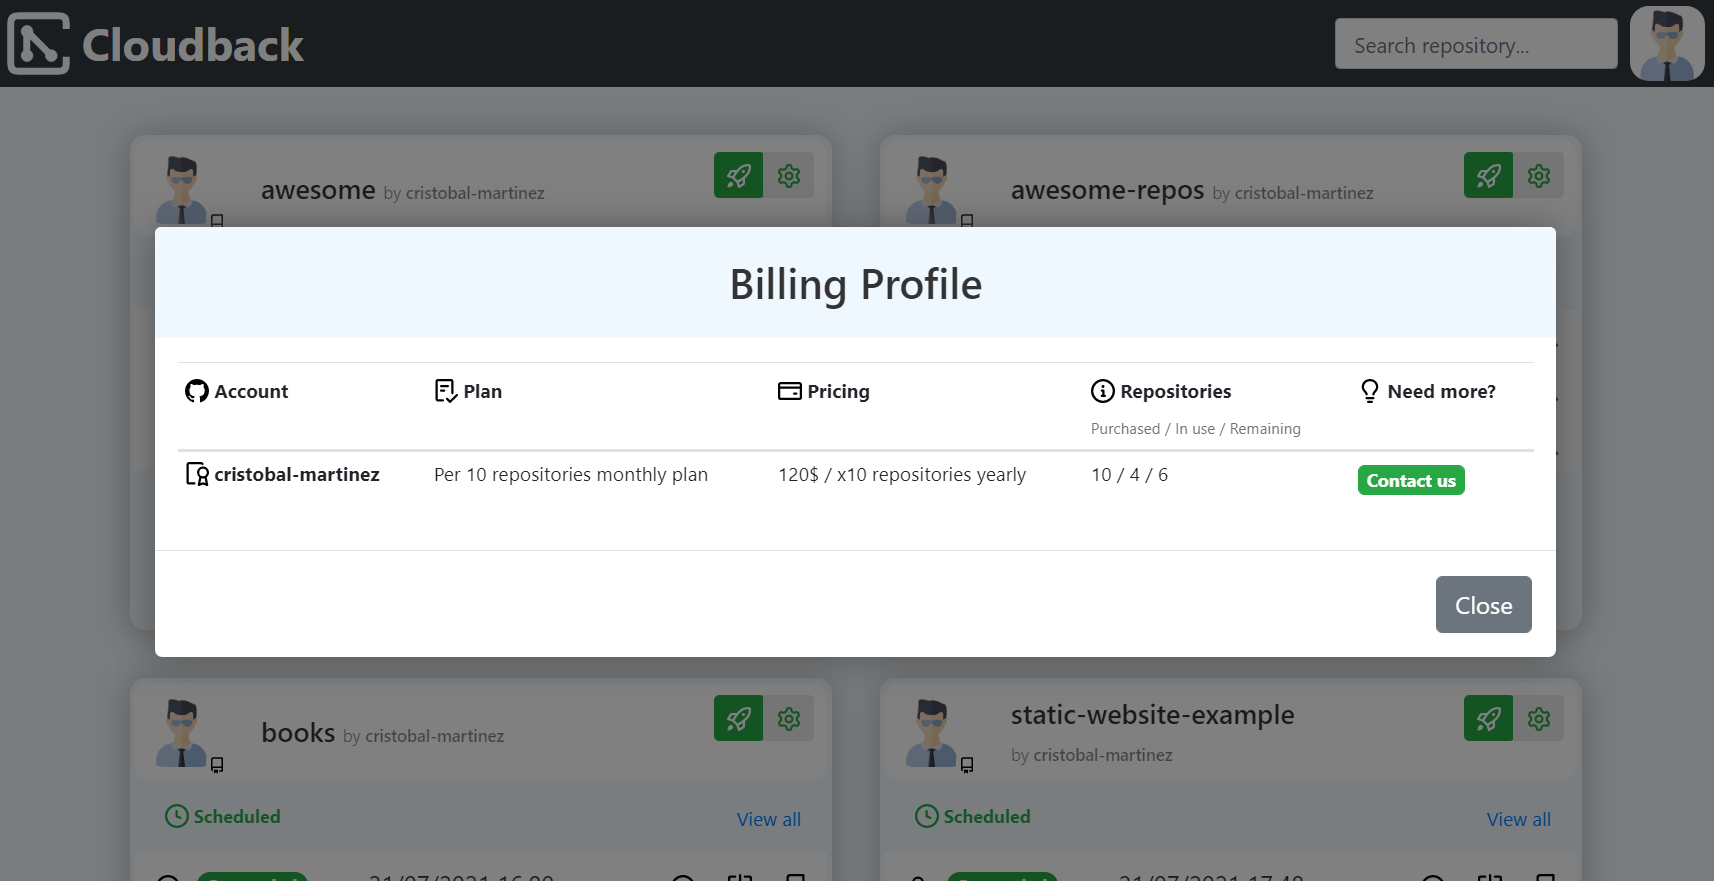 Cloudback user's billing profile